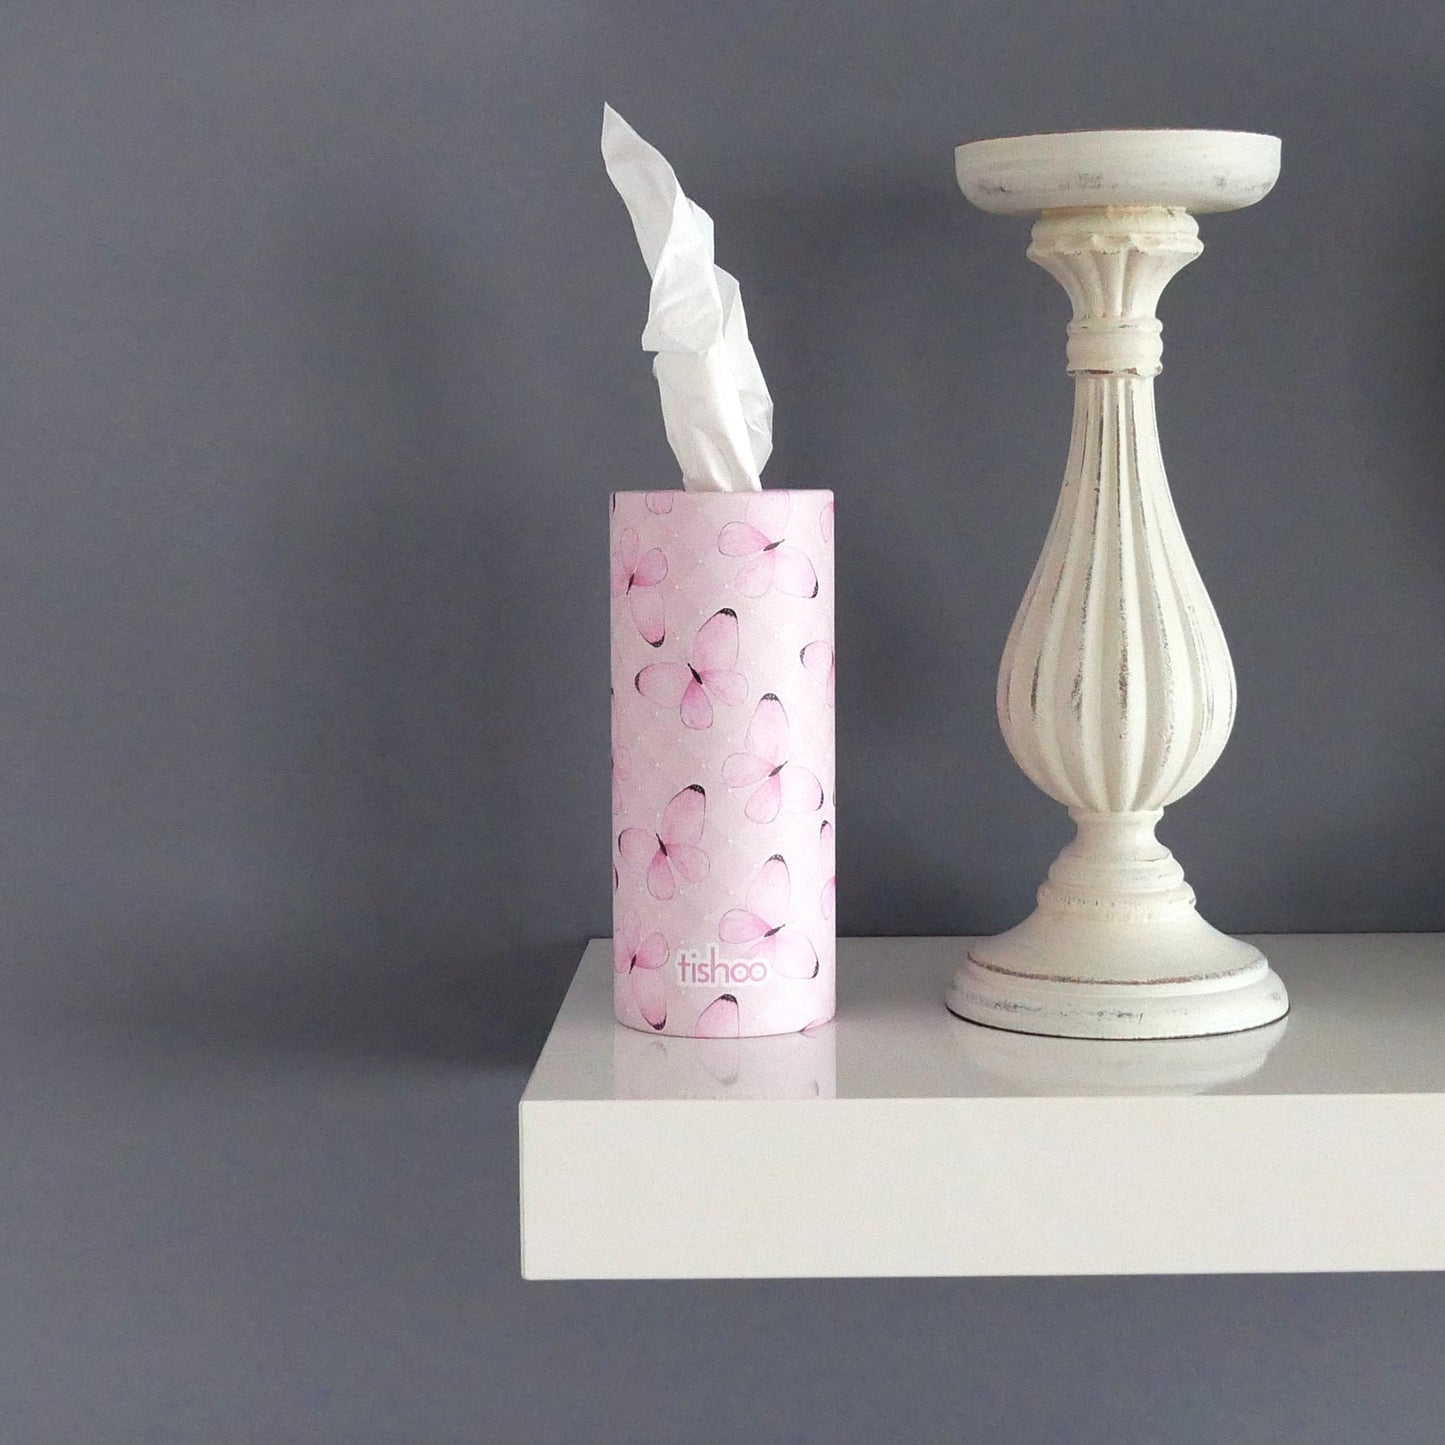 tishoo Luxury Tissues Pink/Butterflies design on shelf